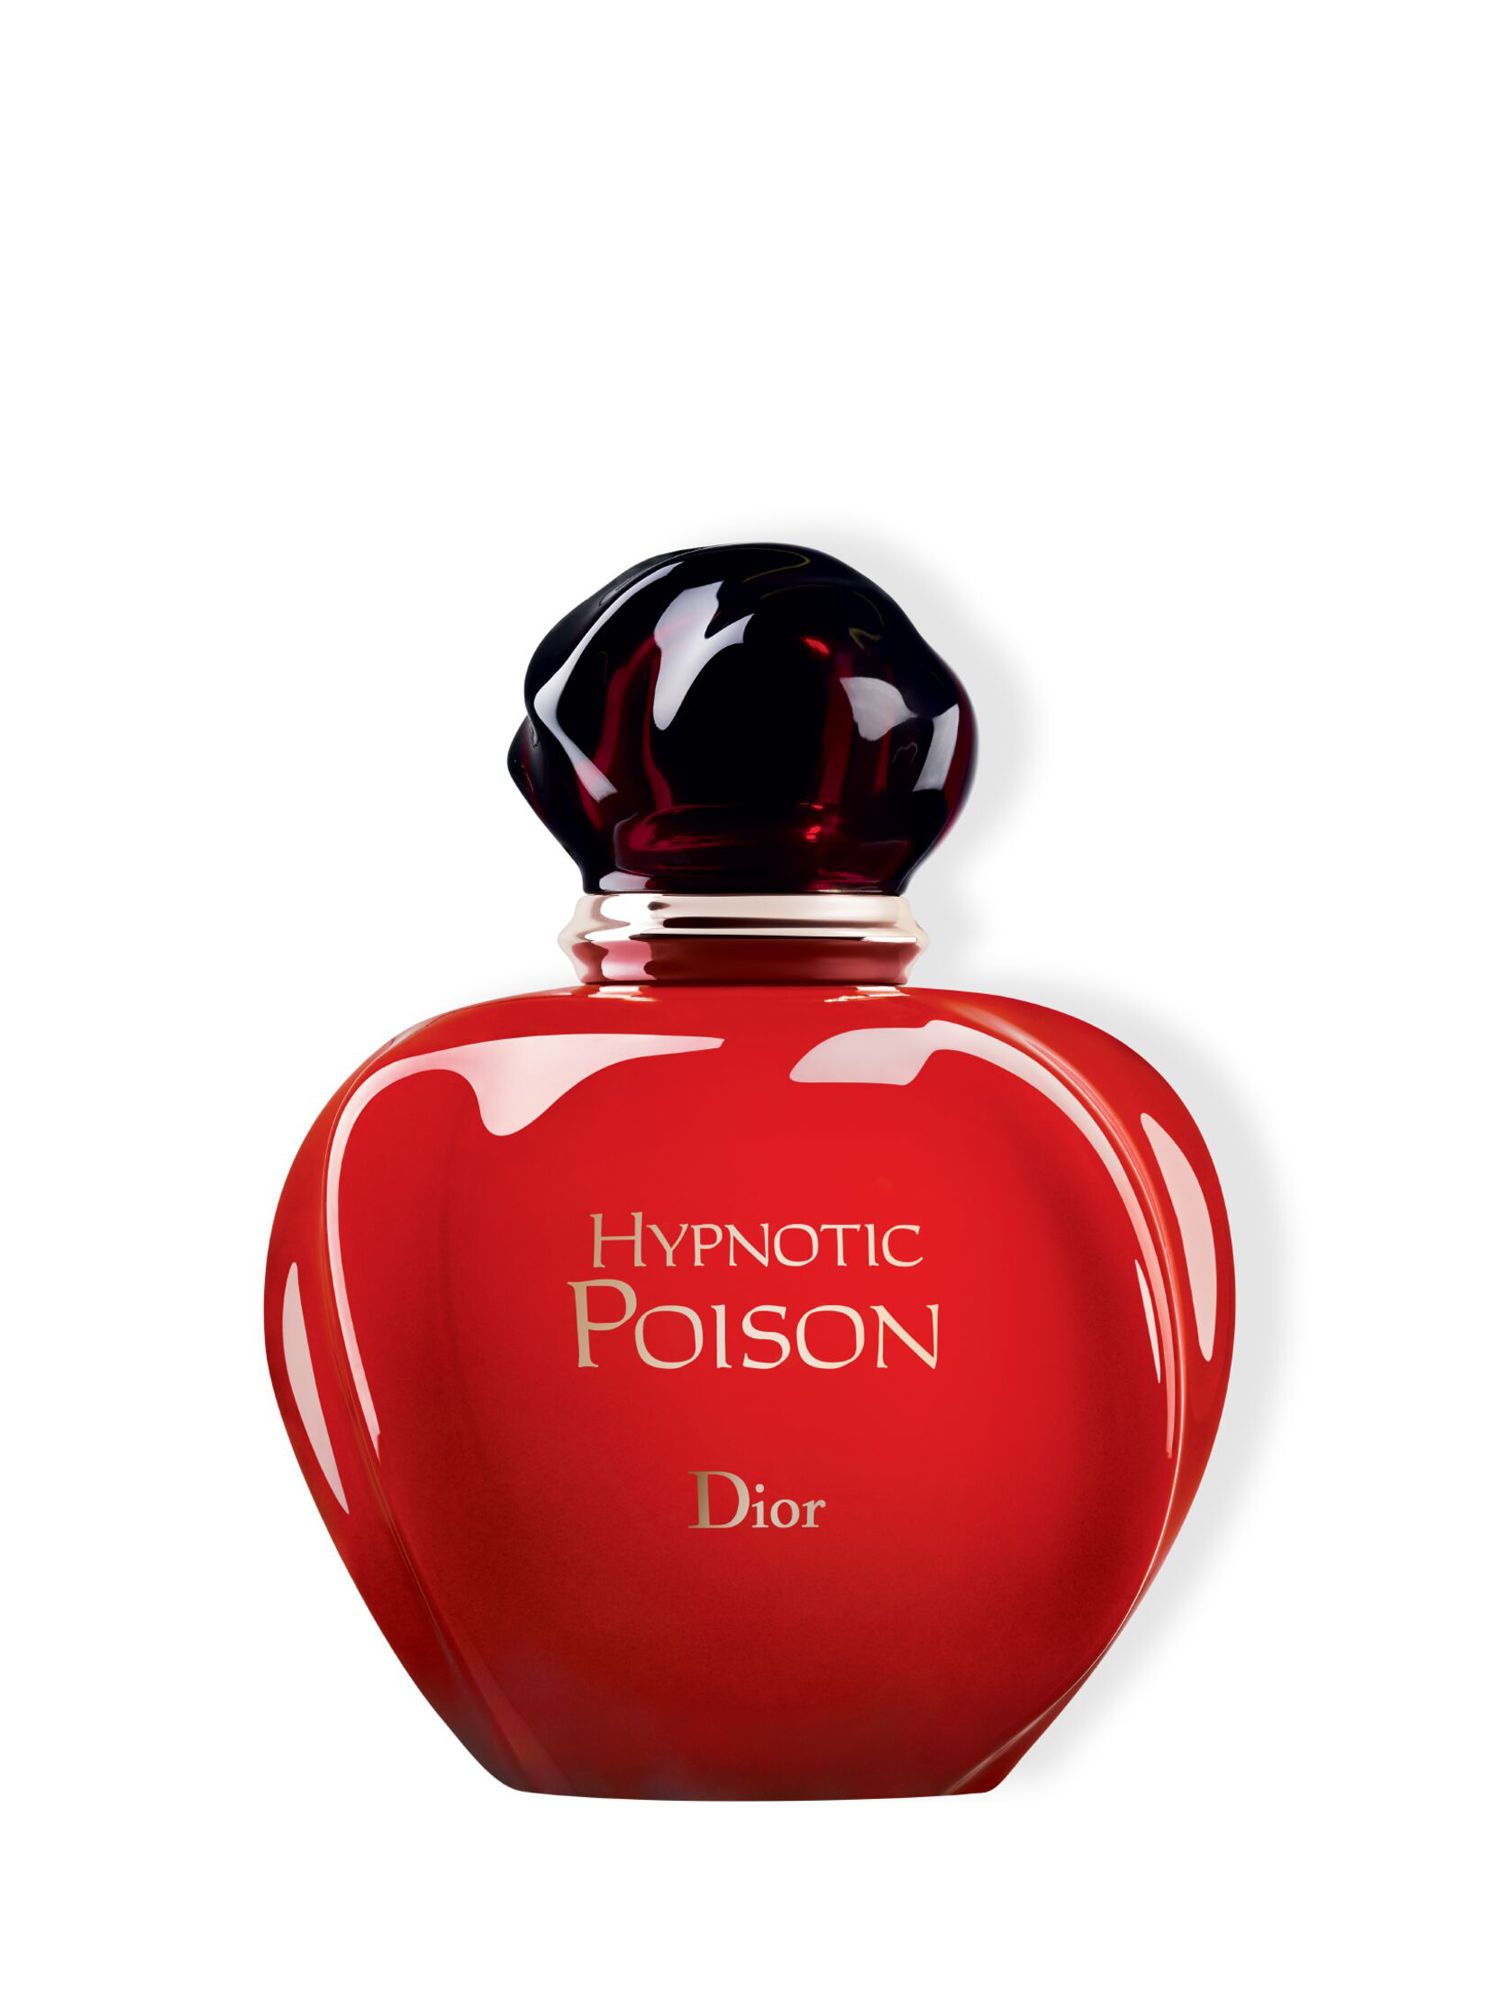 Christian Dior Pure Poison Eau de Parfum Spray 30ml